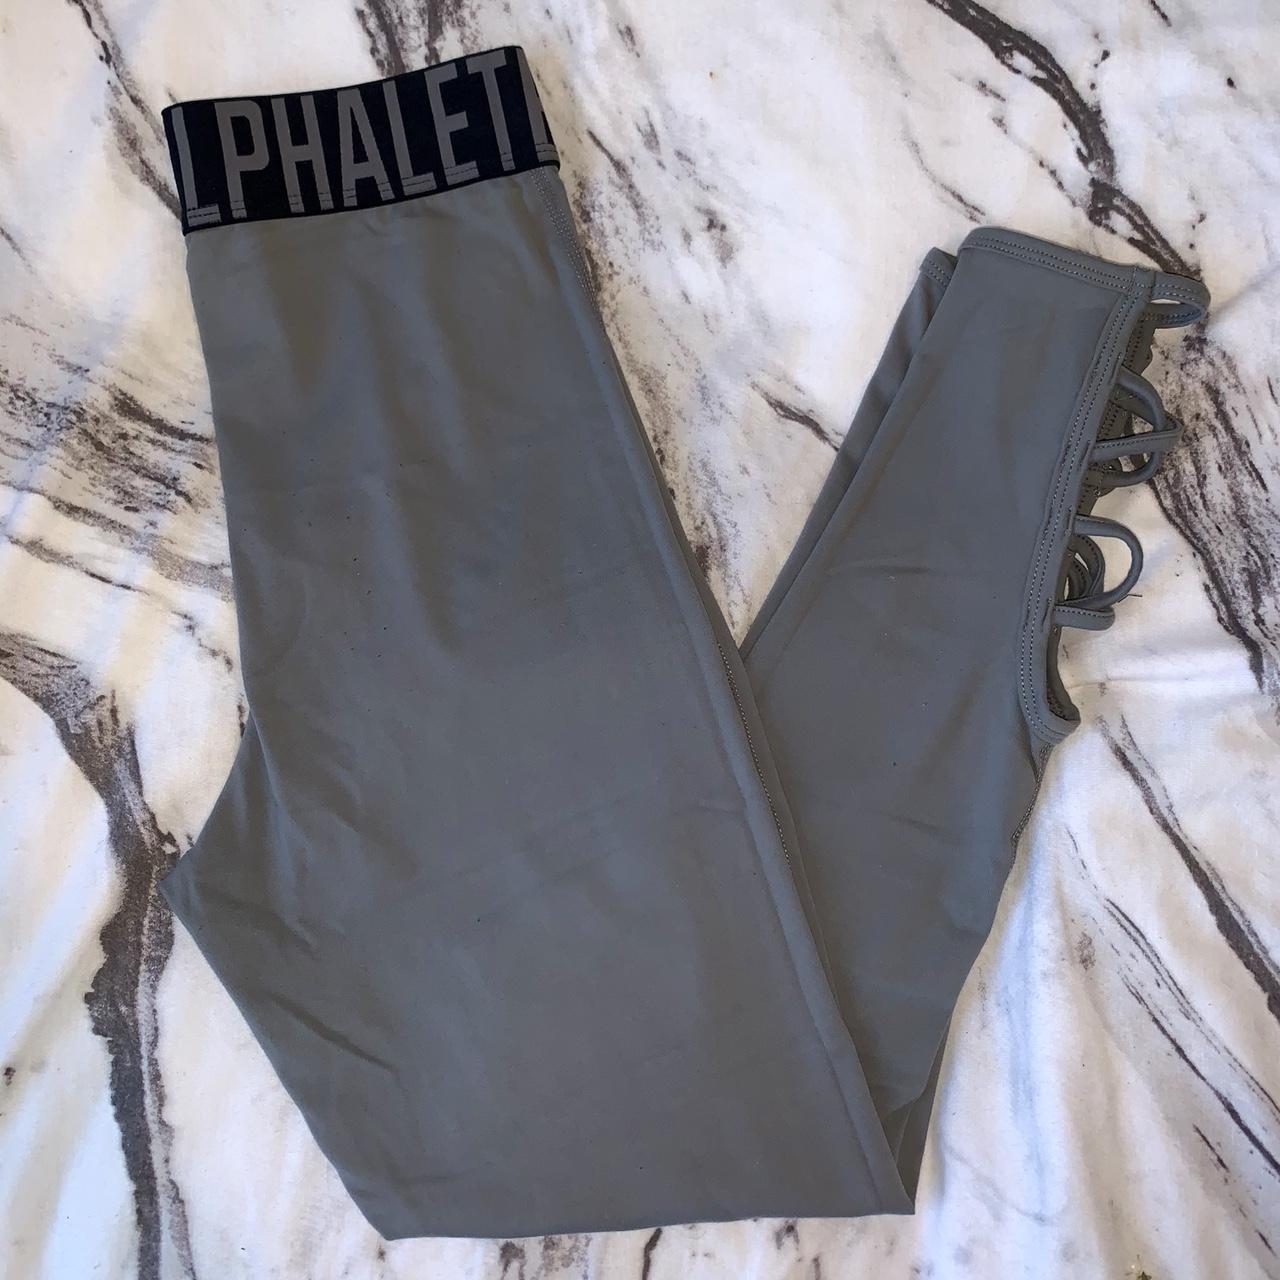 Alphalete grey crossover leggings - size - Depop